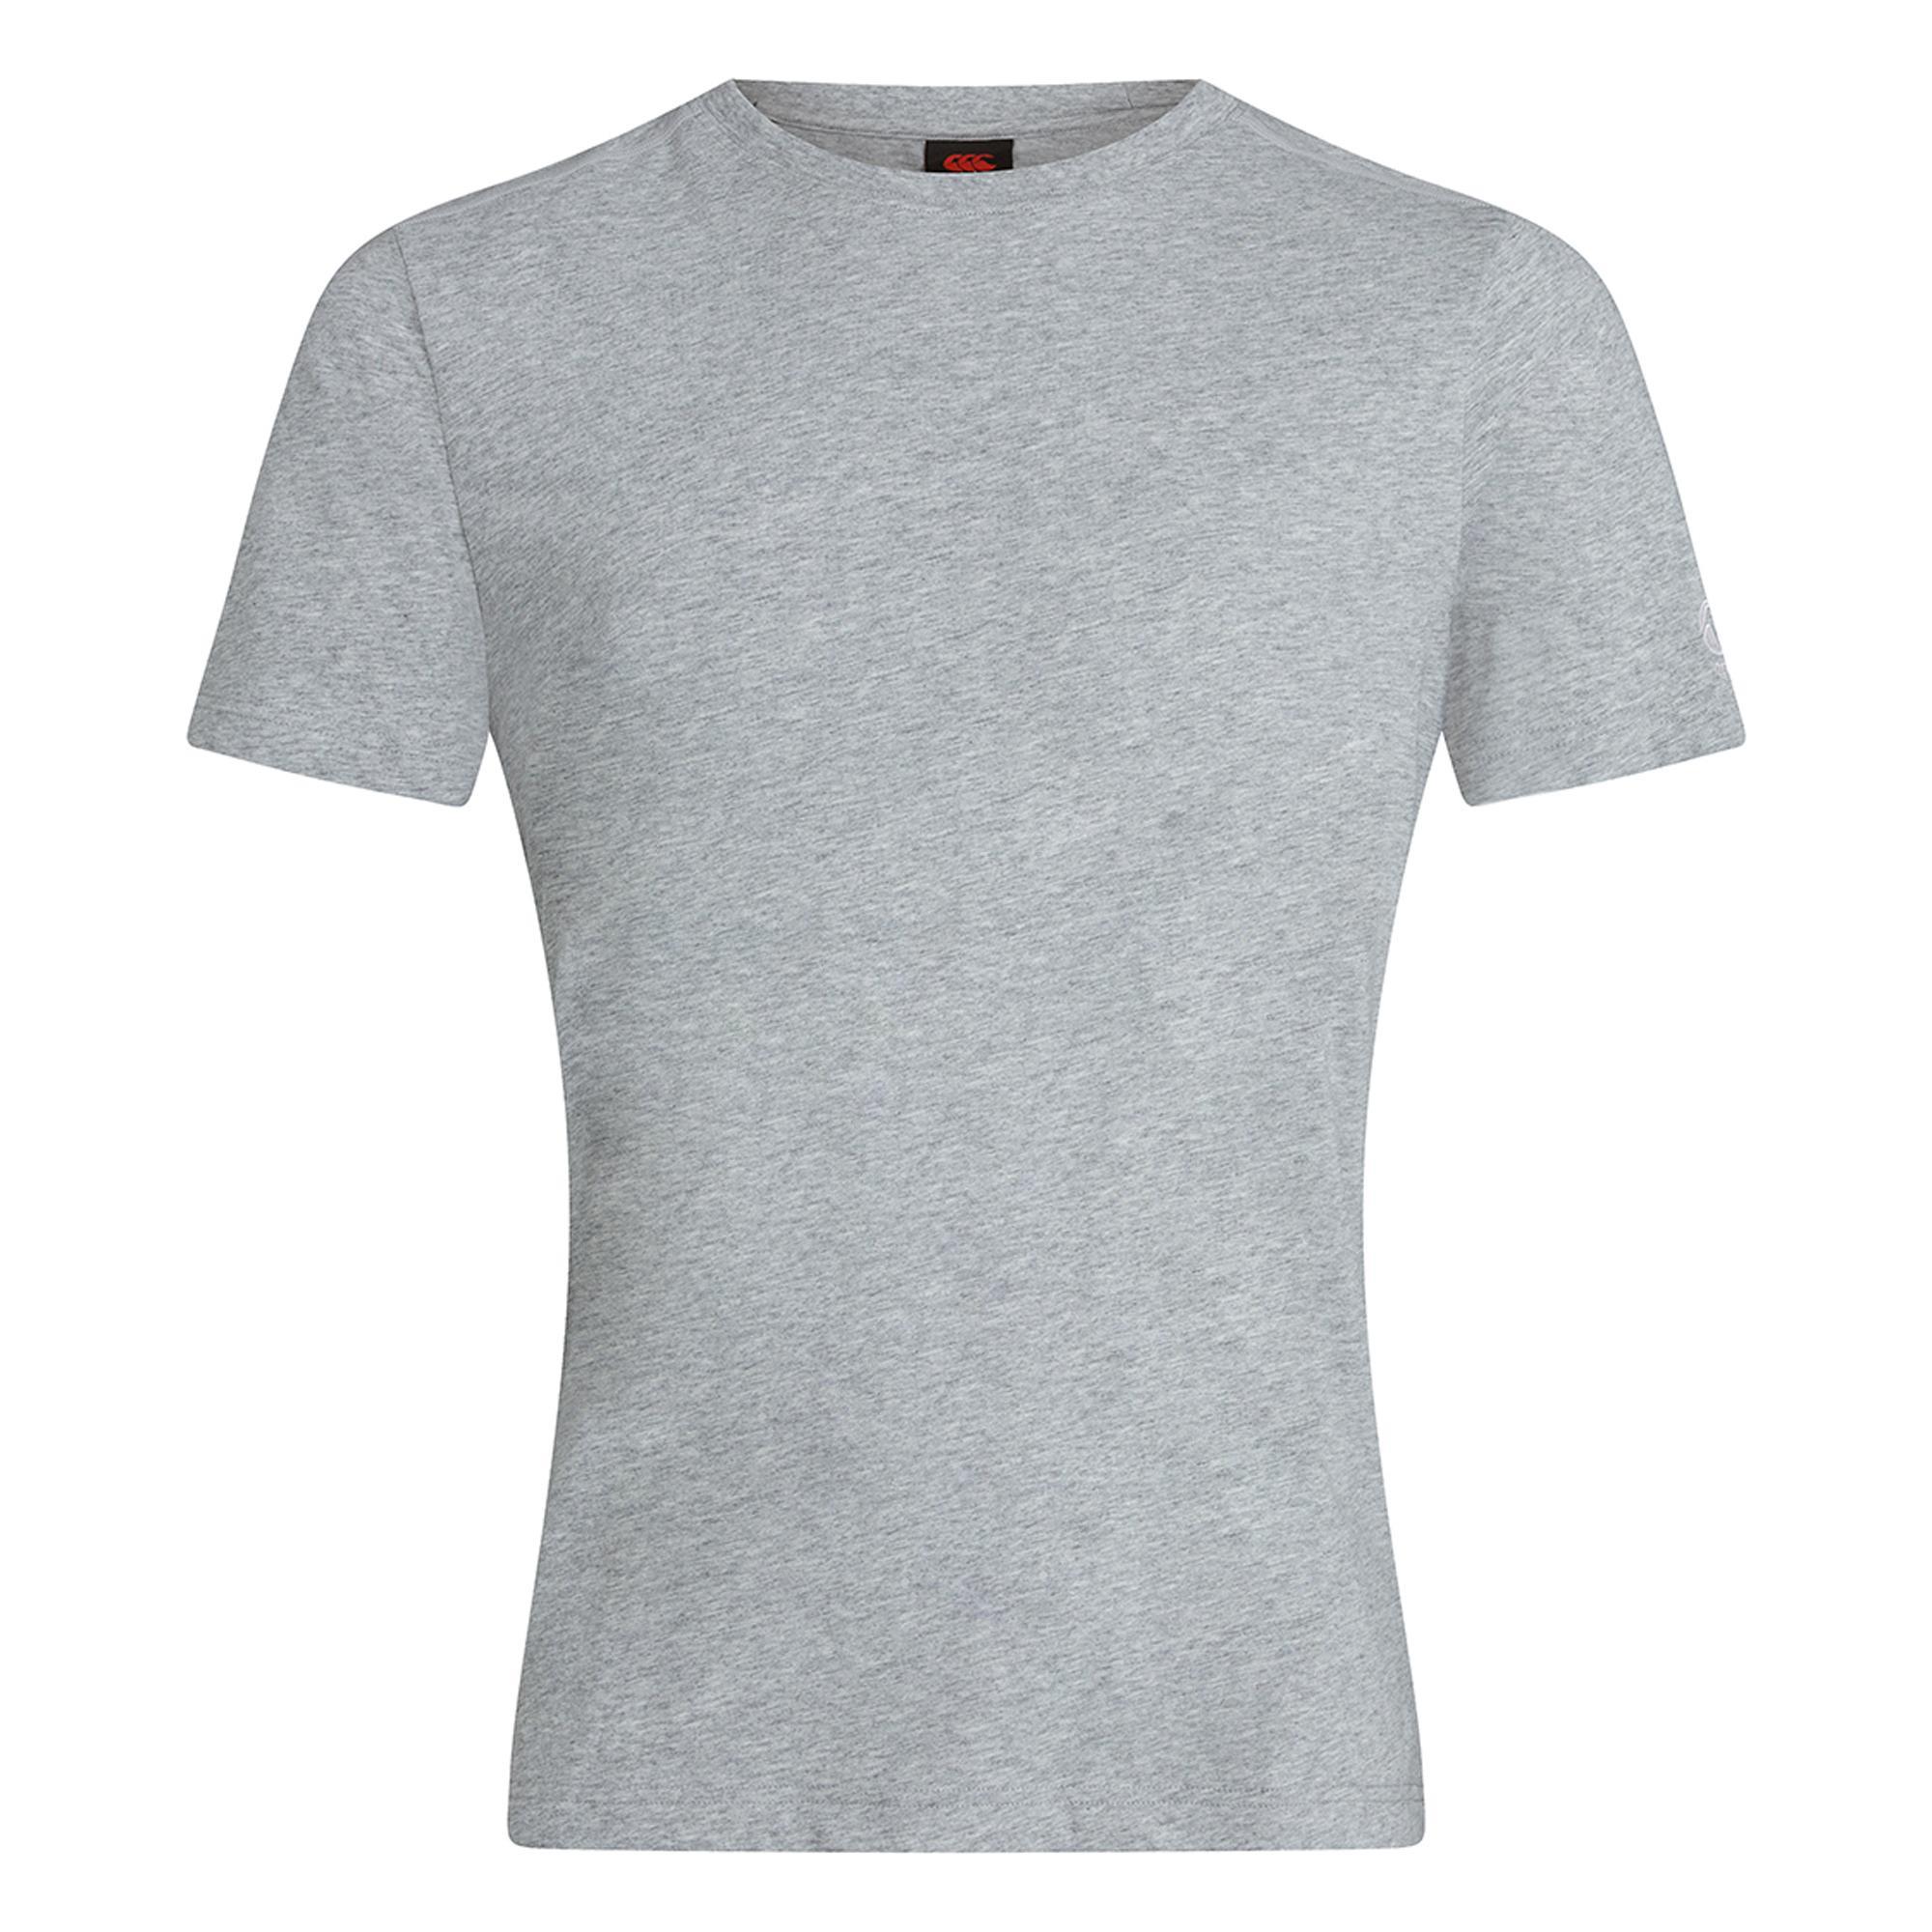 Canterbury Unisex Adult Club Plain T-Shirt (Grey Marl) (M)